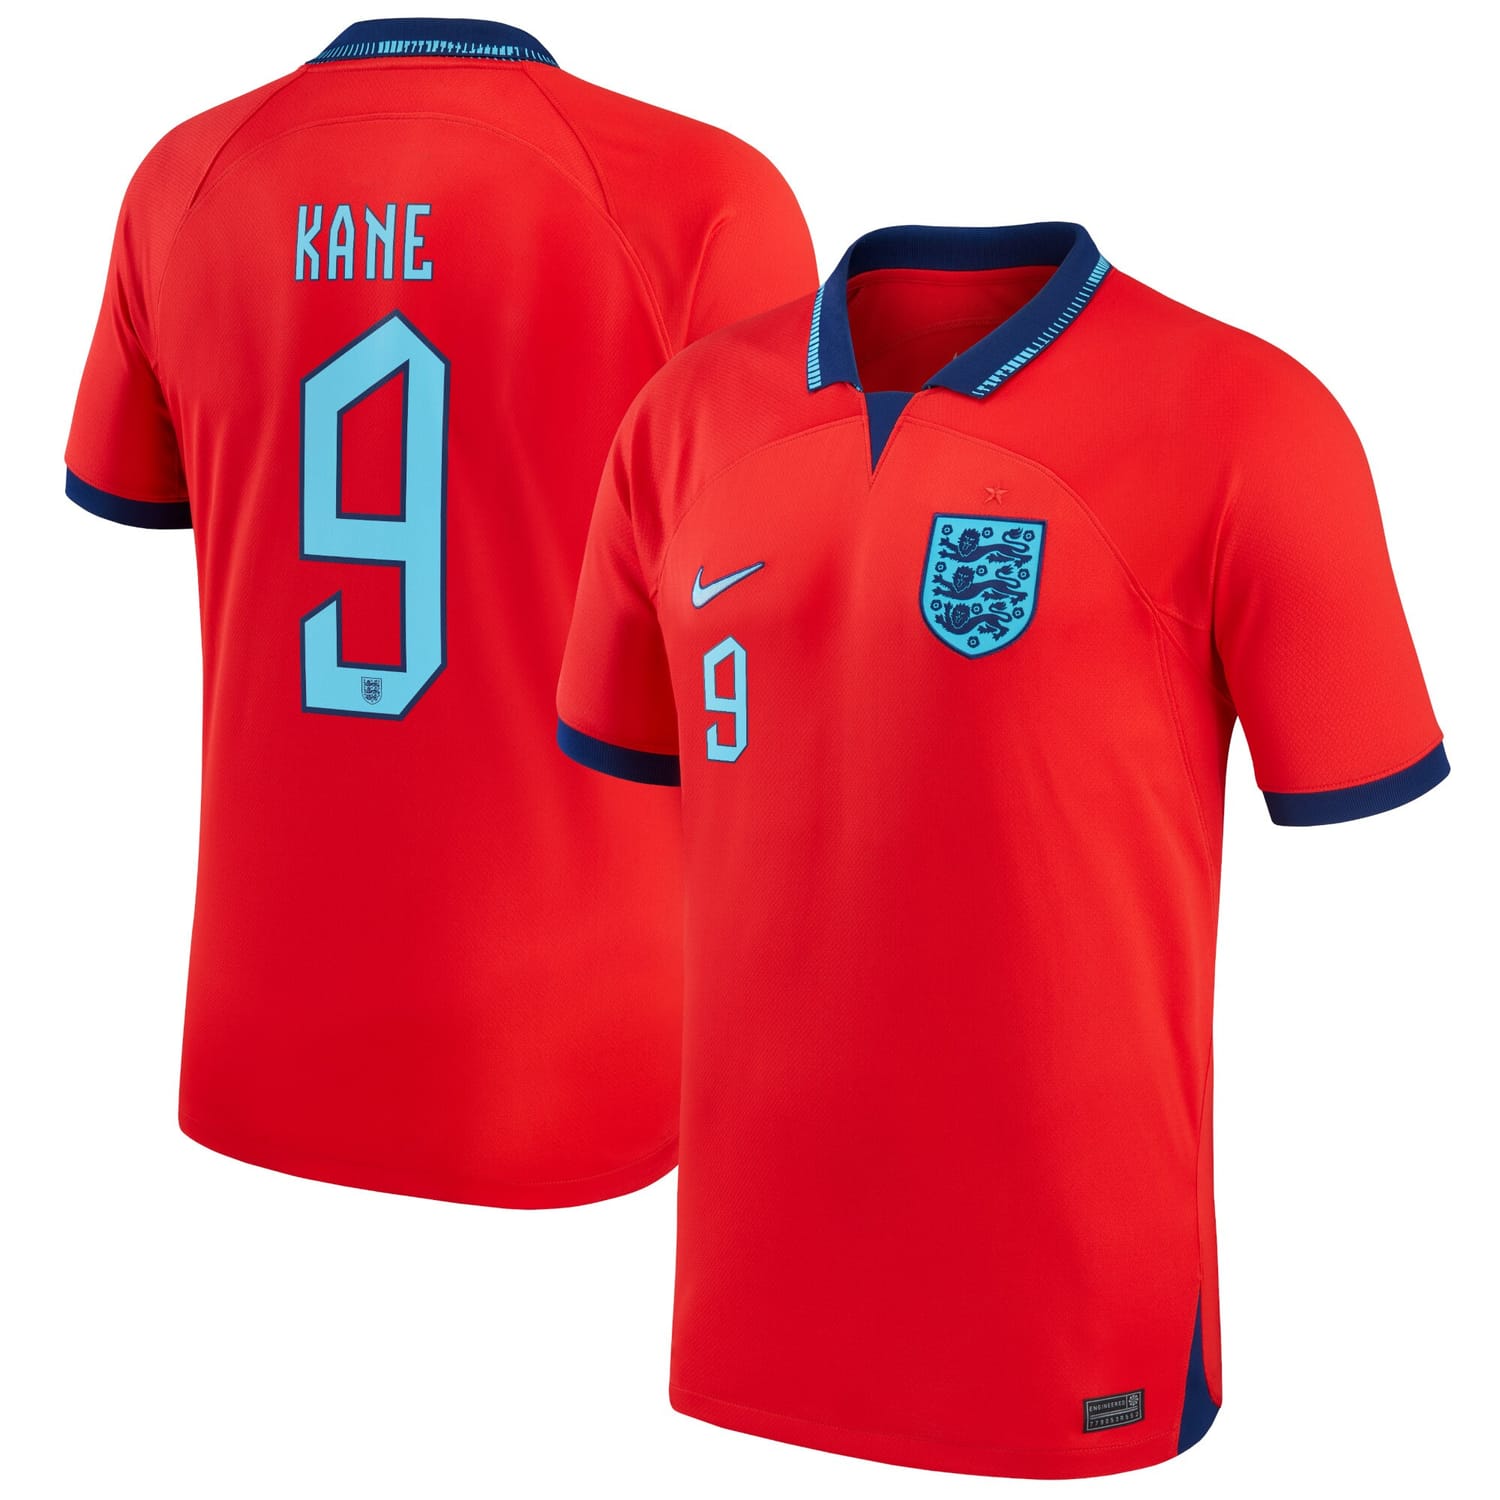 England National Team Away Jersey Shirt Red 2022-23 player Harry Kane printing for Men